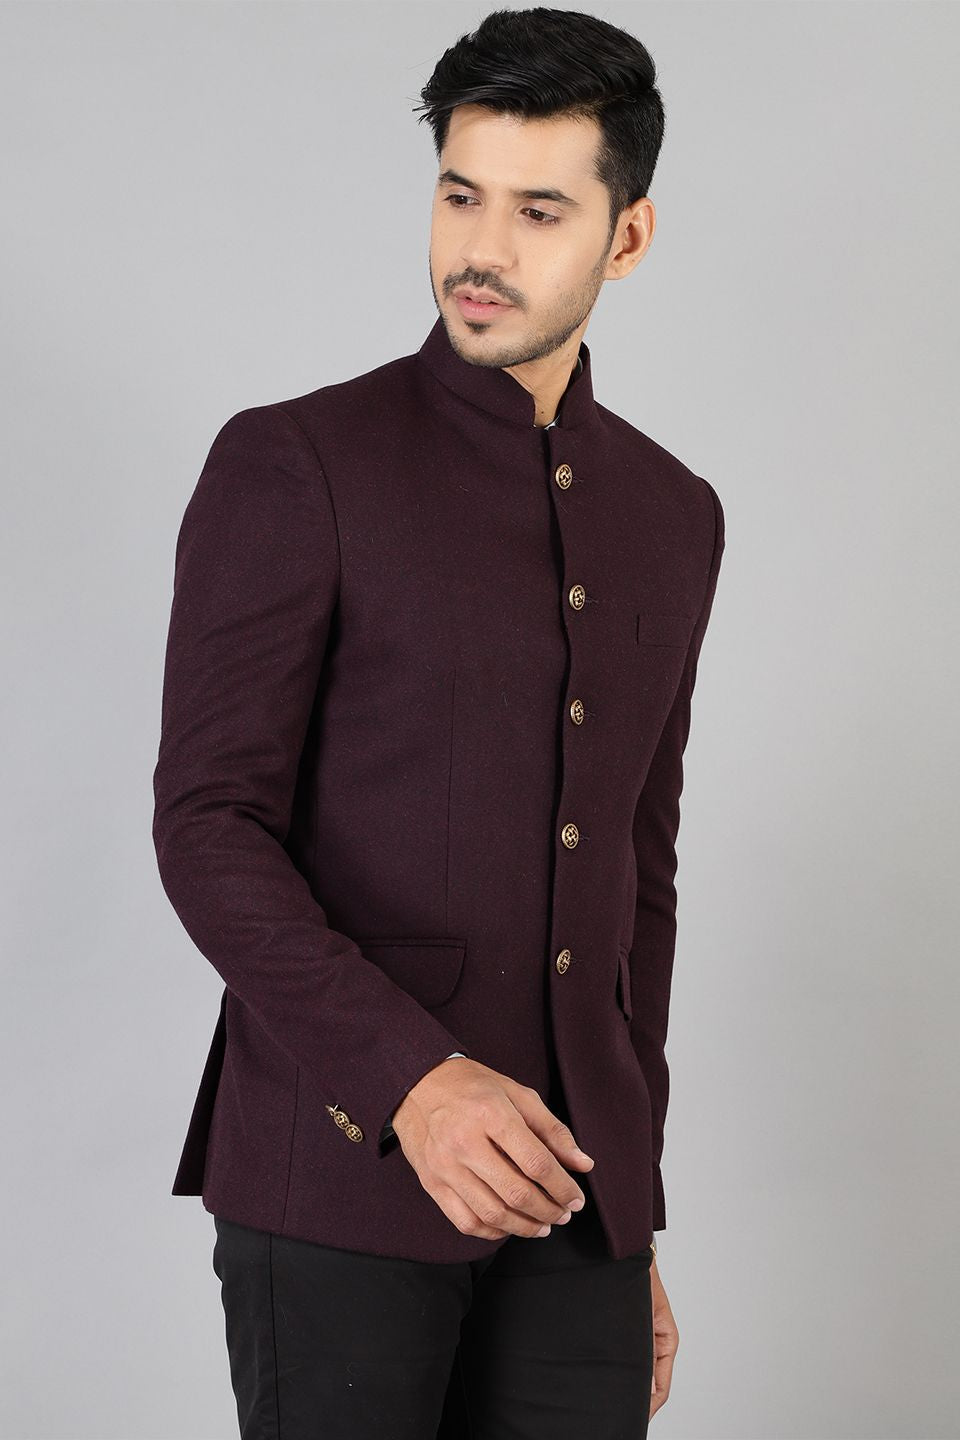 Wool Purple Bandhgala